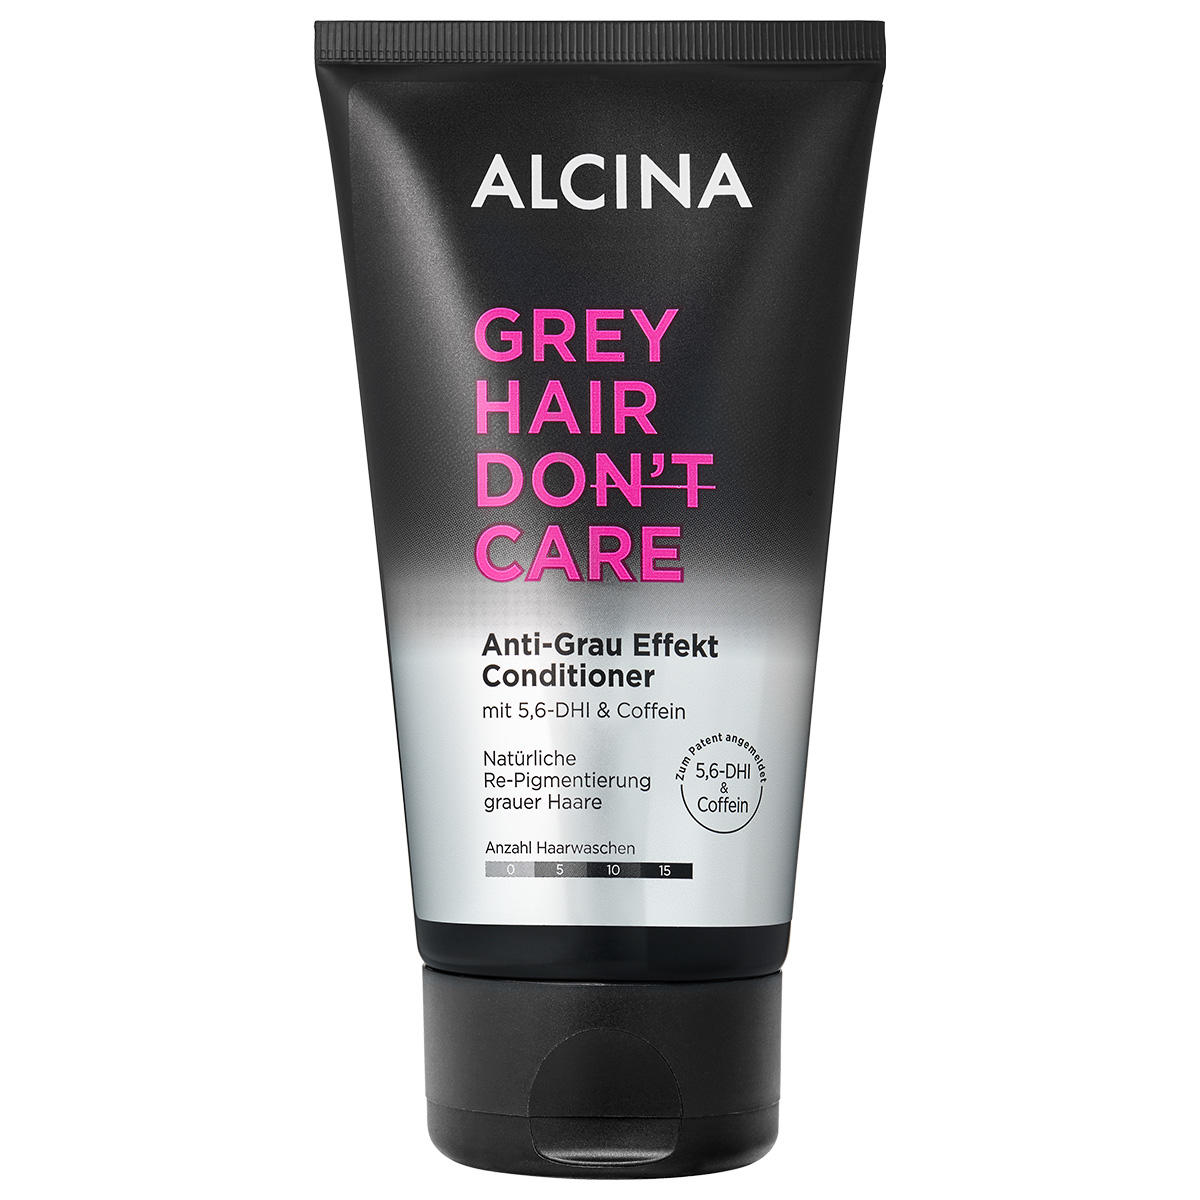 Alcina GREY HAIR DON’T CARE Anti-Grau Effekt Conditioner 150 ml - 1